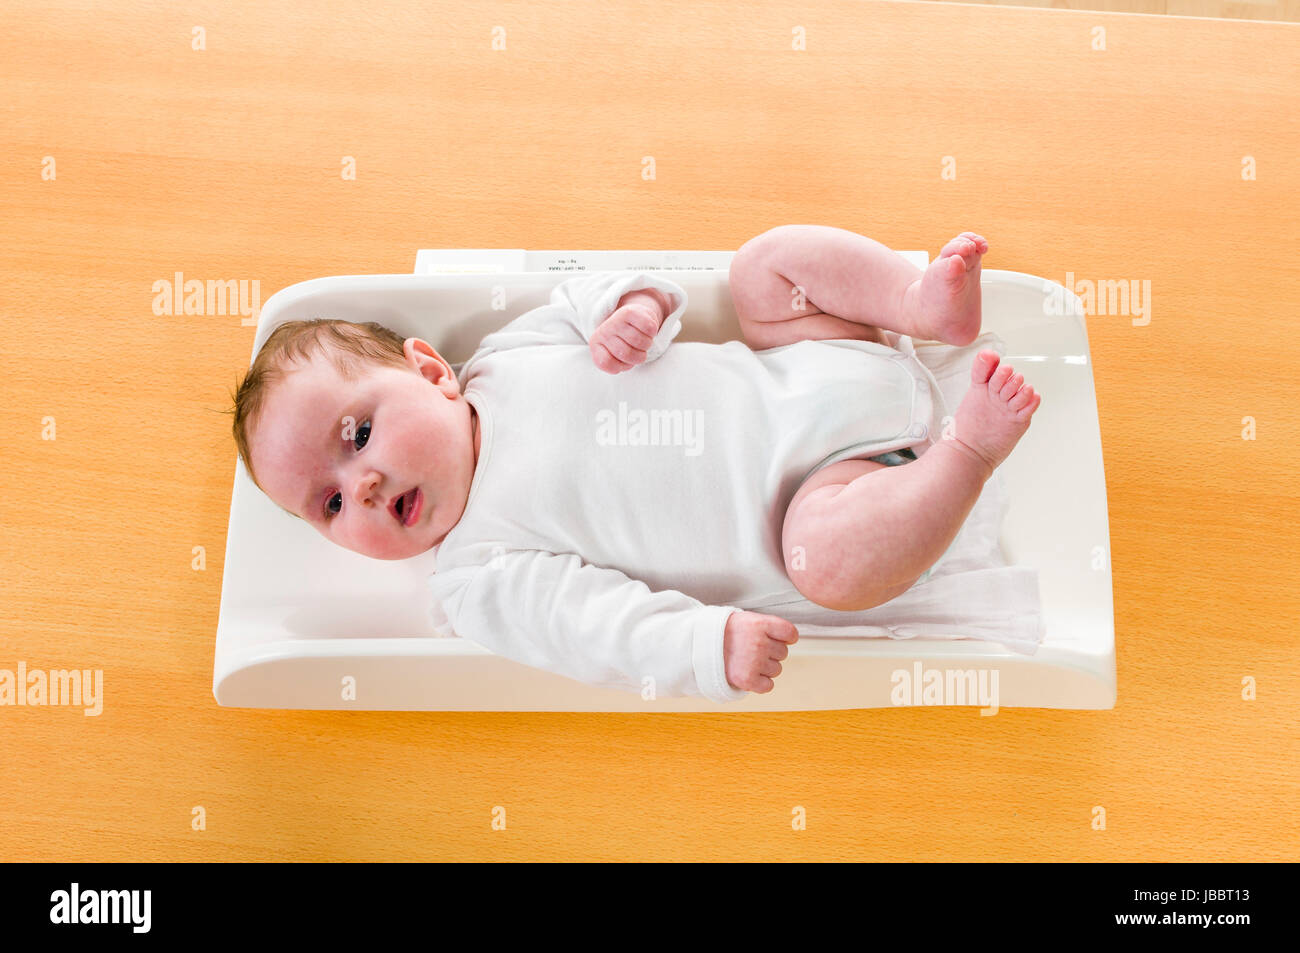 https://c8.alamy.com/comp/JBBT13/newborn-baby-lying-on-a-white-baby-scale-JBBT13.jpg